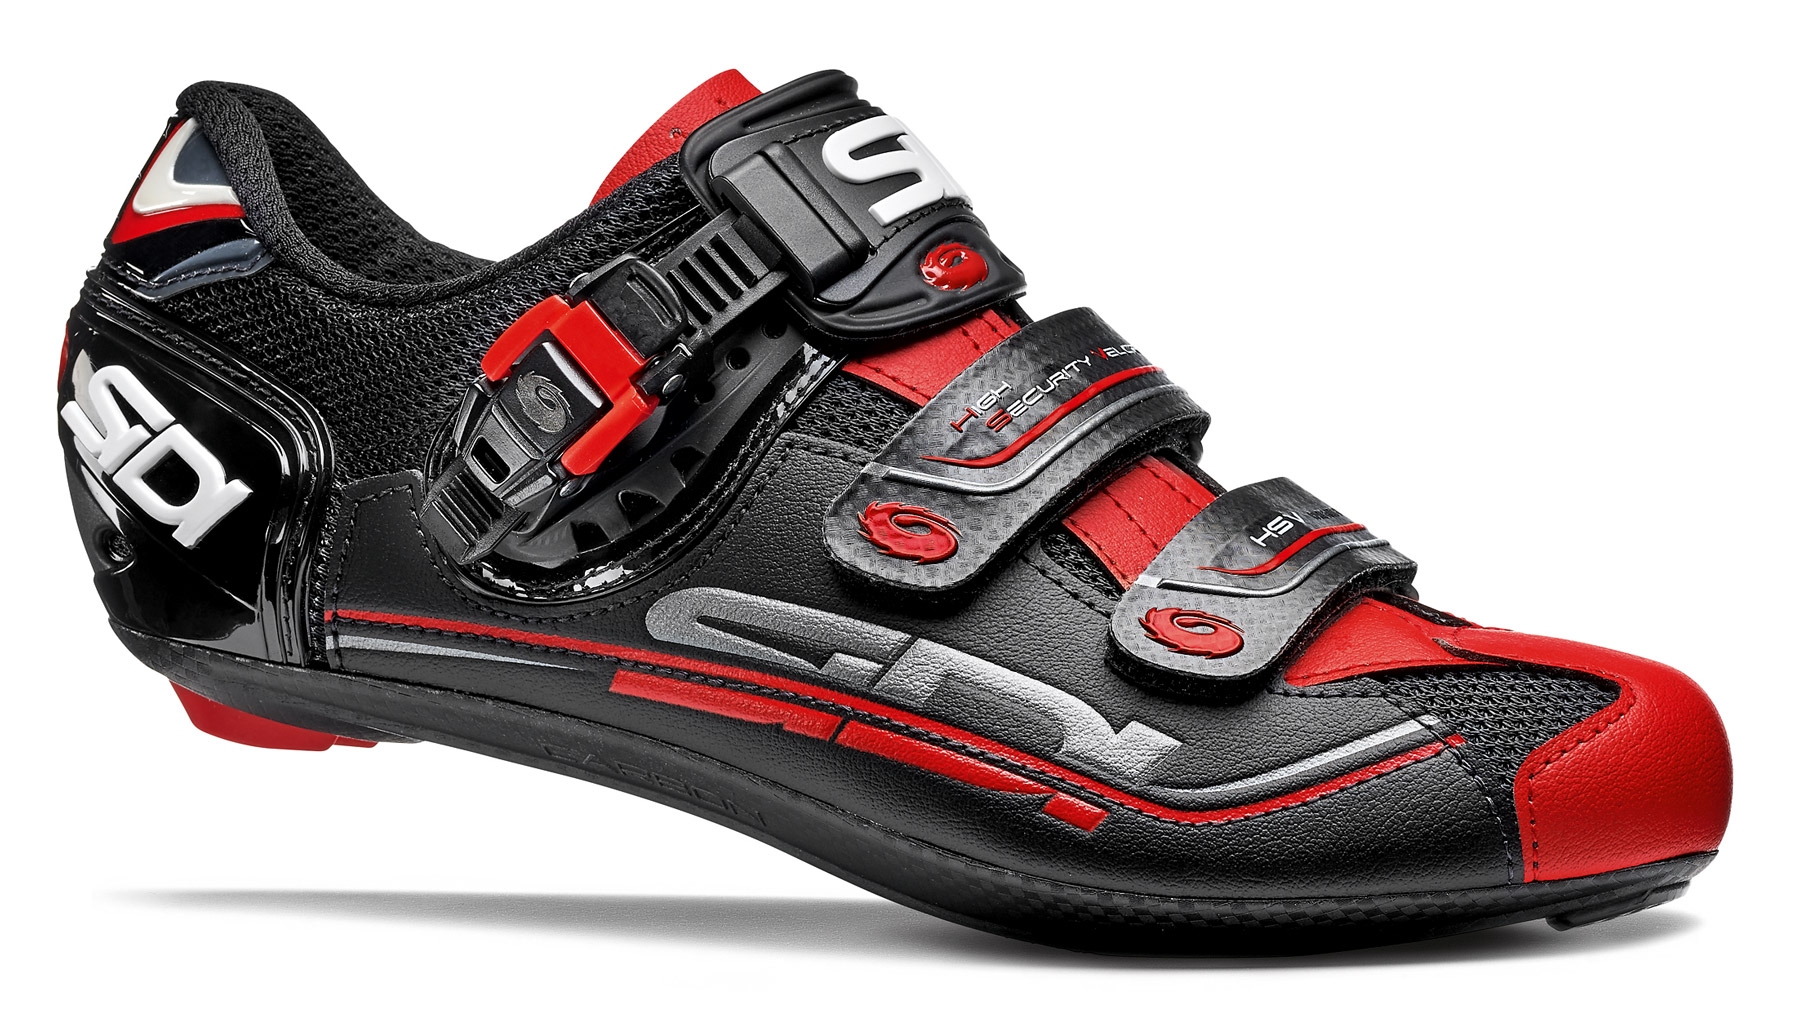 New SIDI Genius 7 Road Bike Cycling Shoes Black Red EU41-EU44 